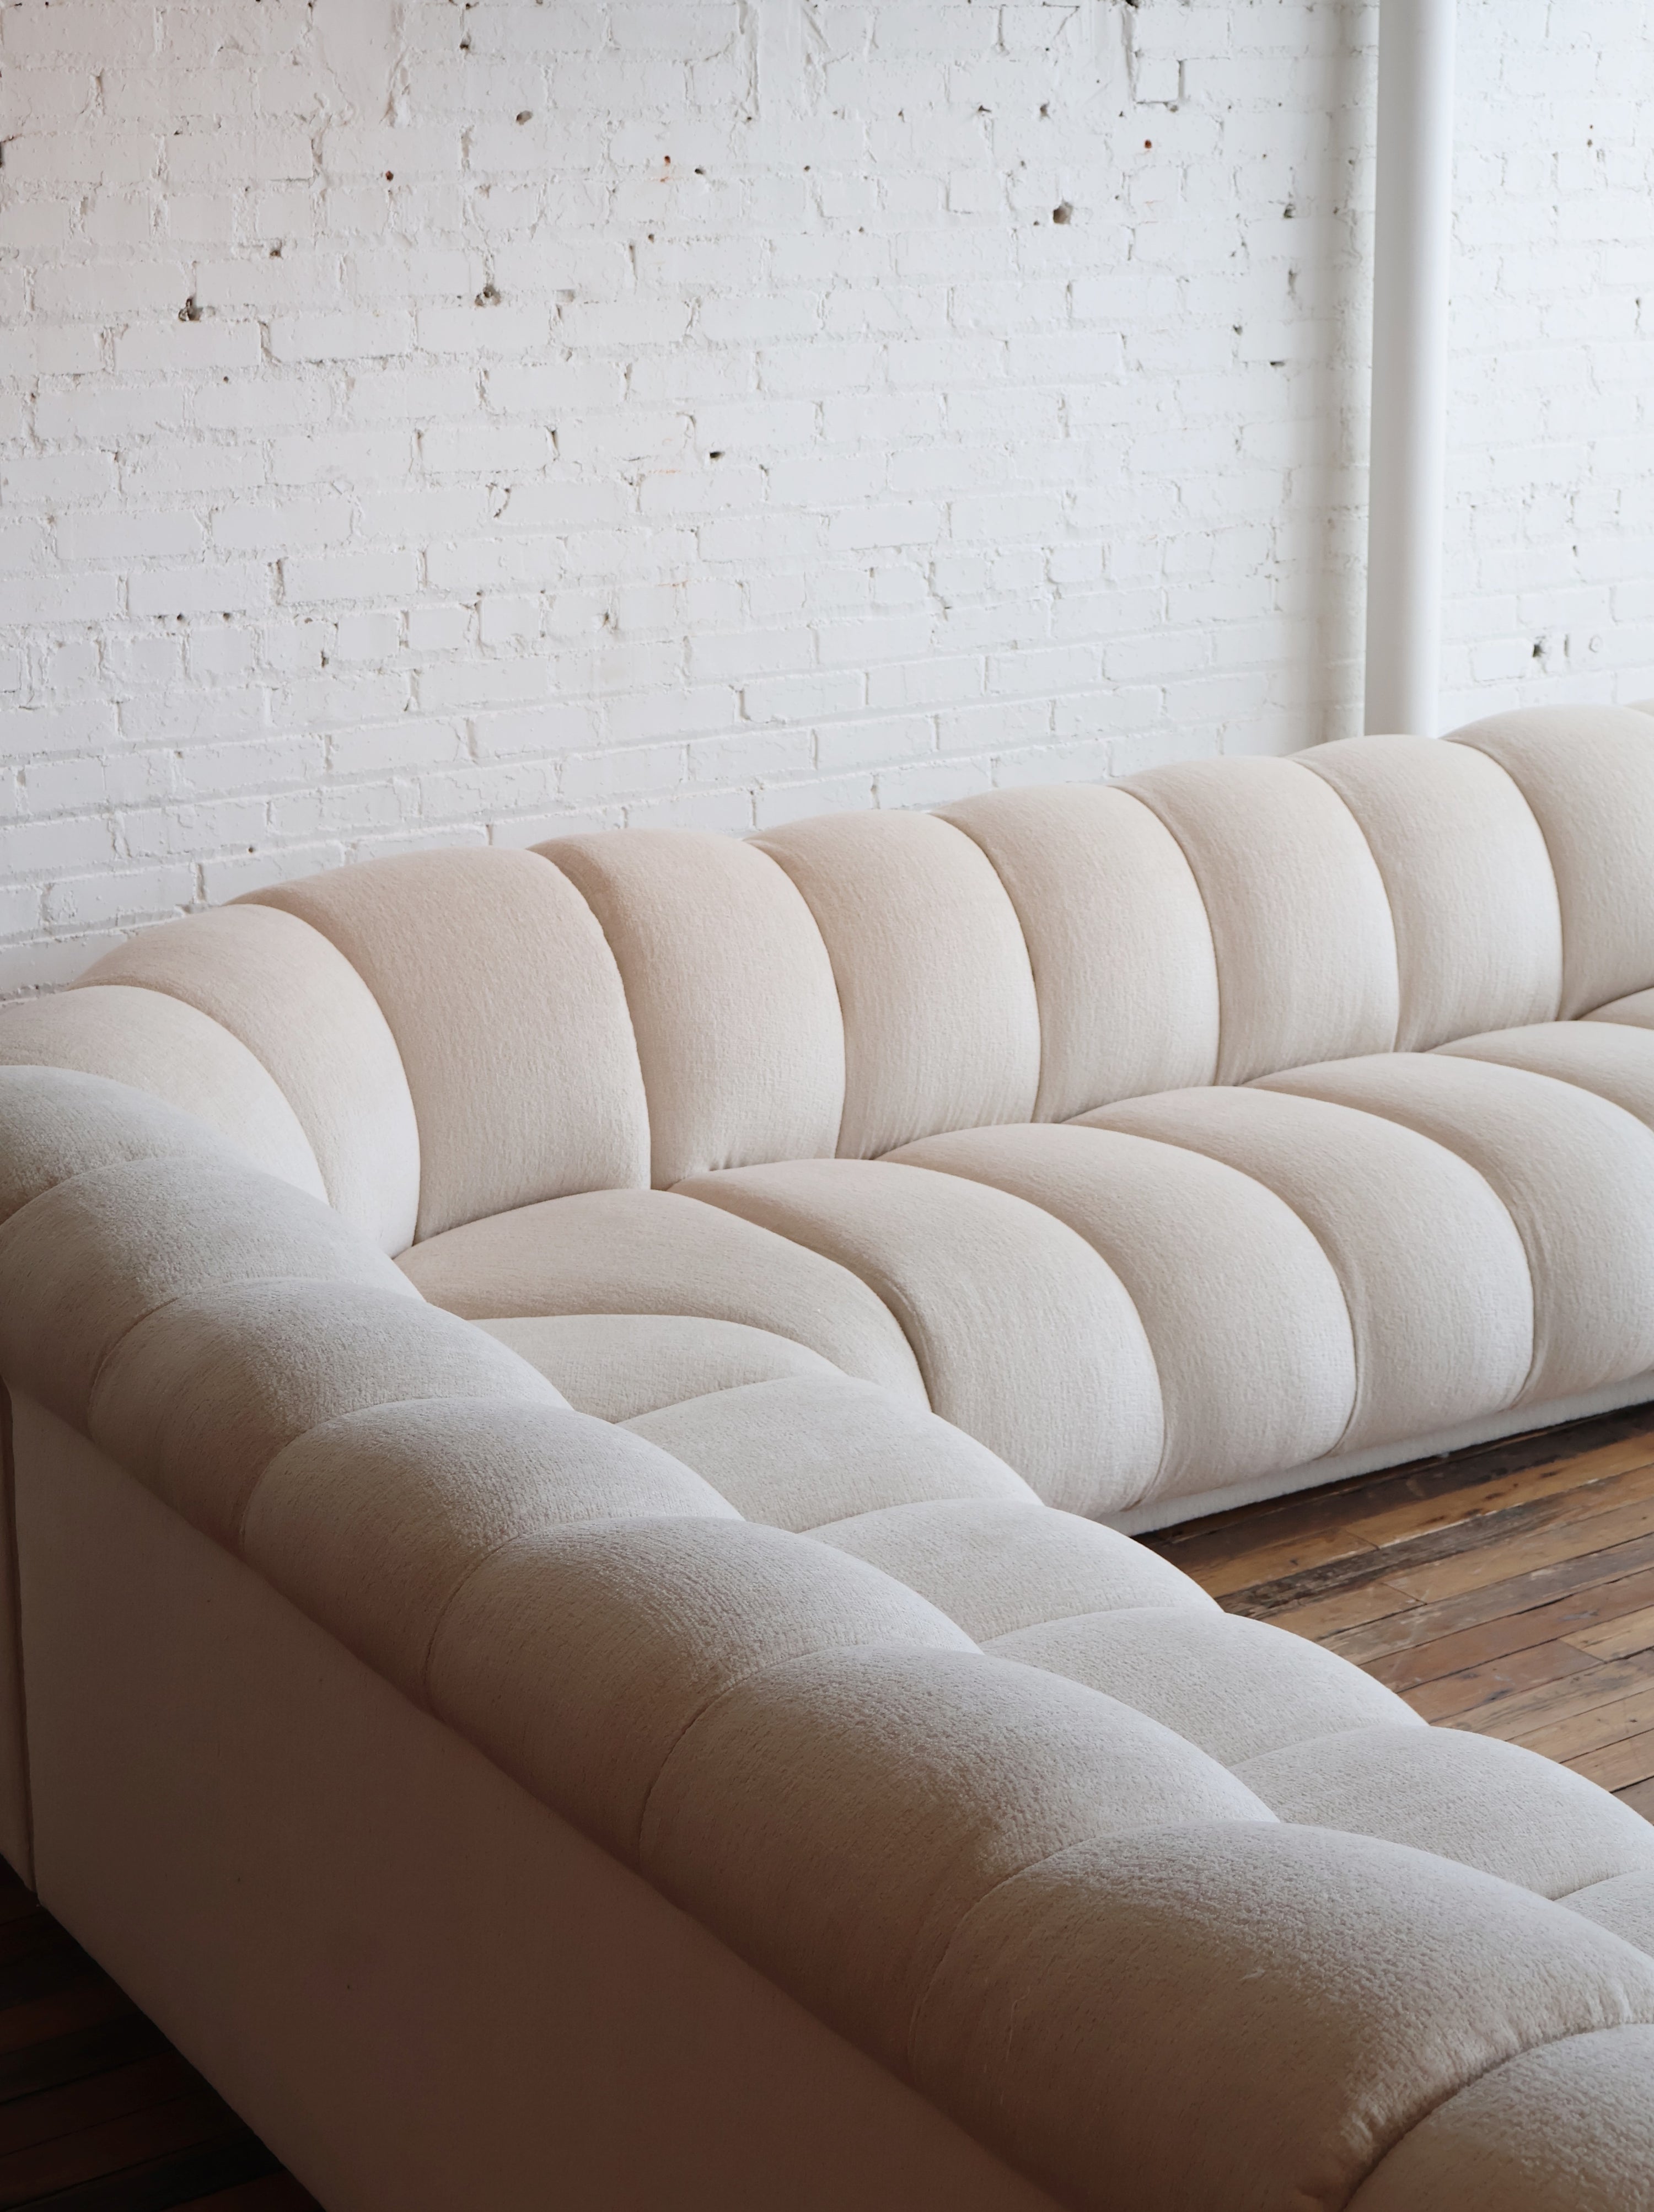 Vintage Custom Upholstered Directional Channeled Sectional Sofa